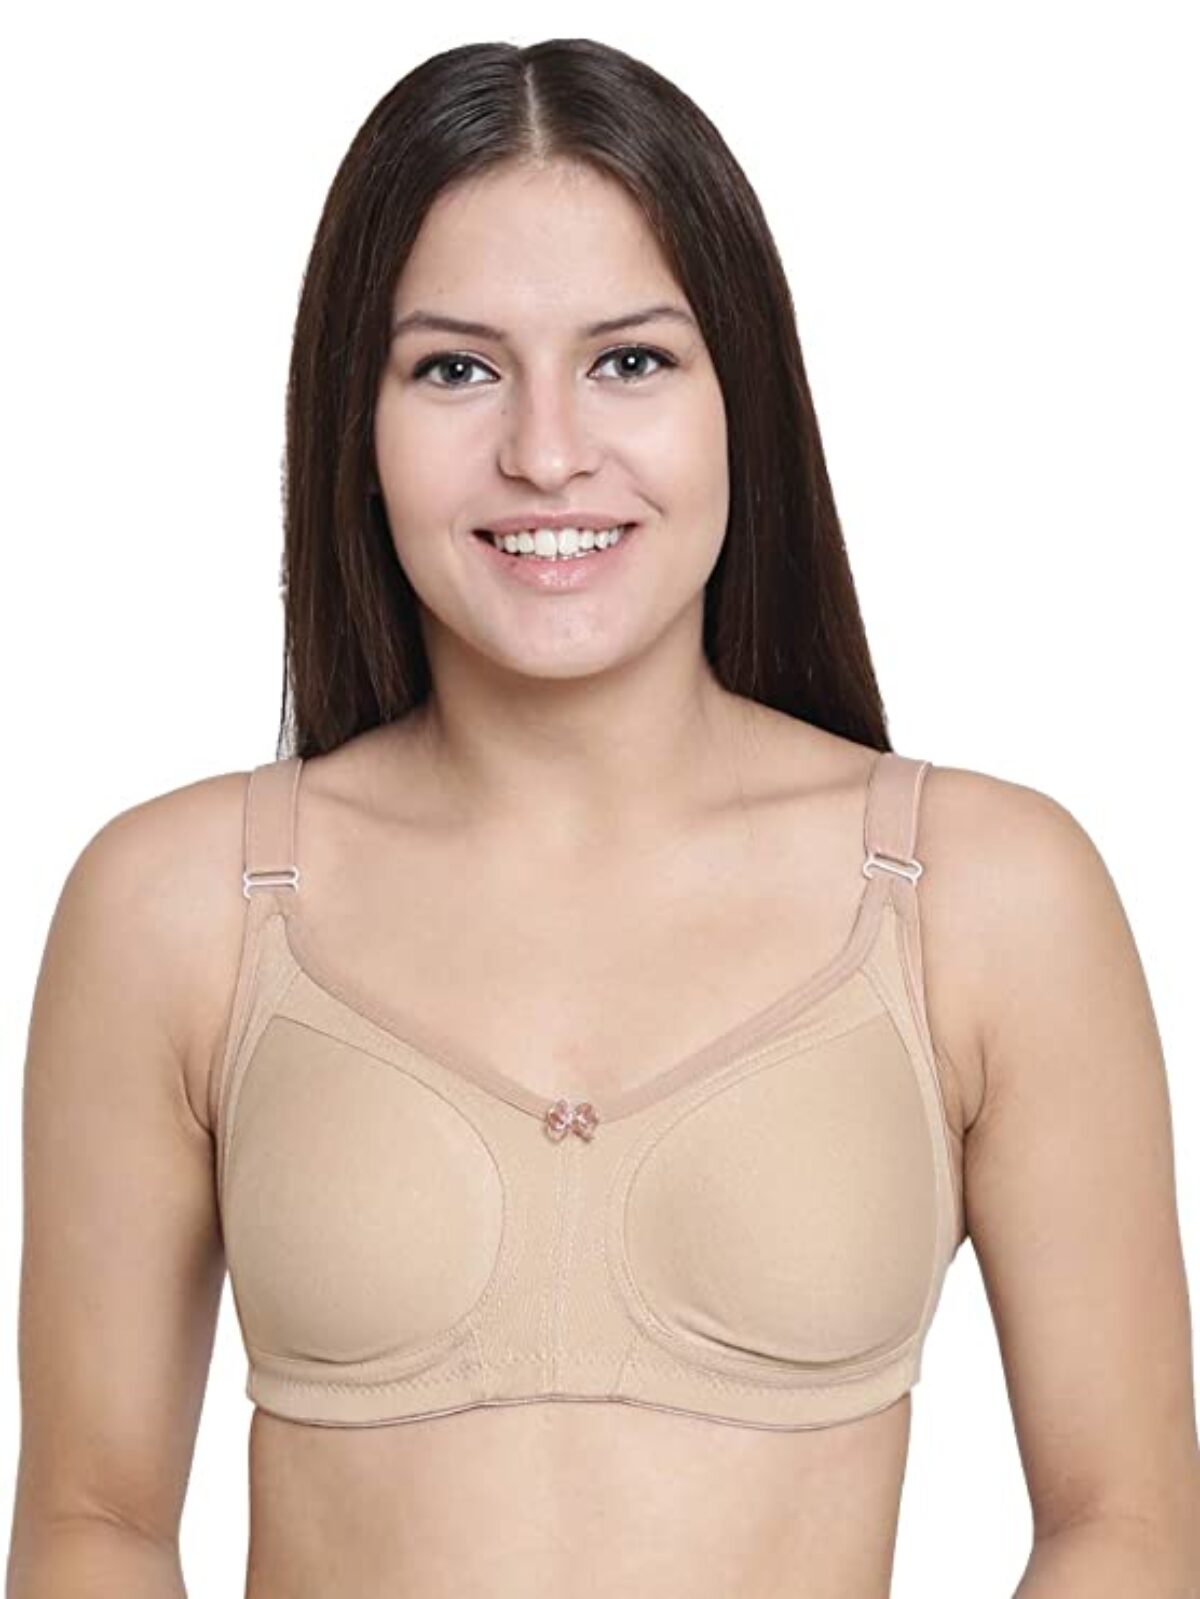 Krutika Plain - India's most popular dailywear bra with X support